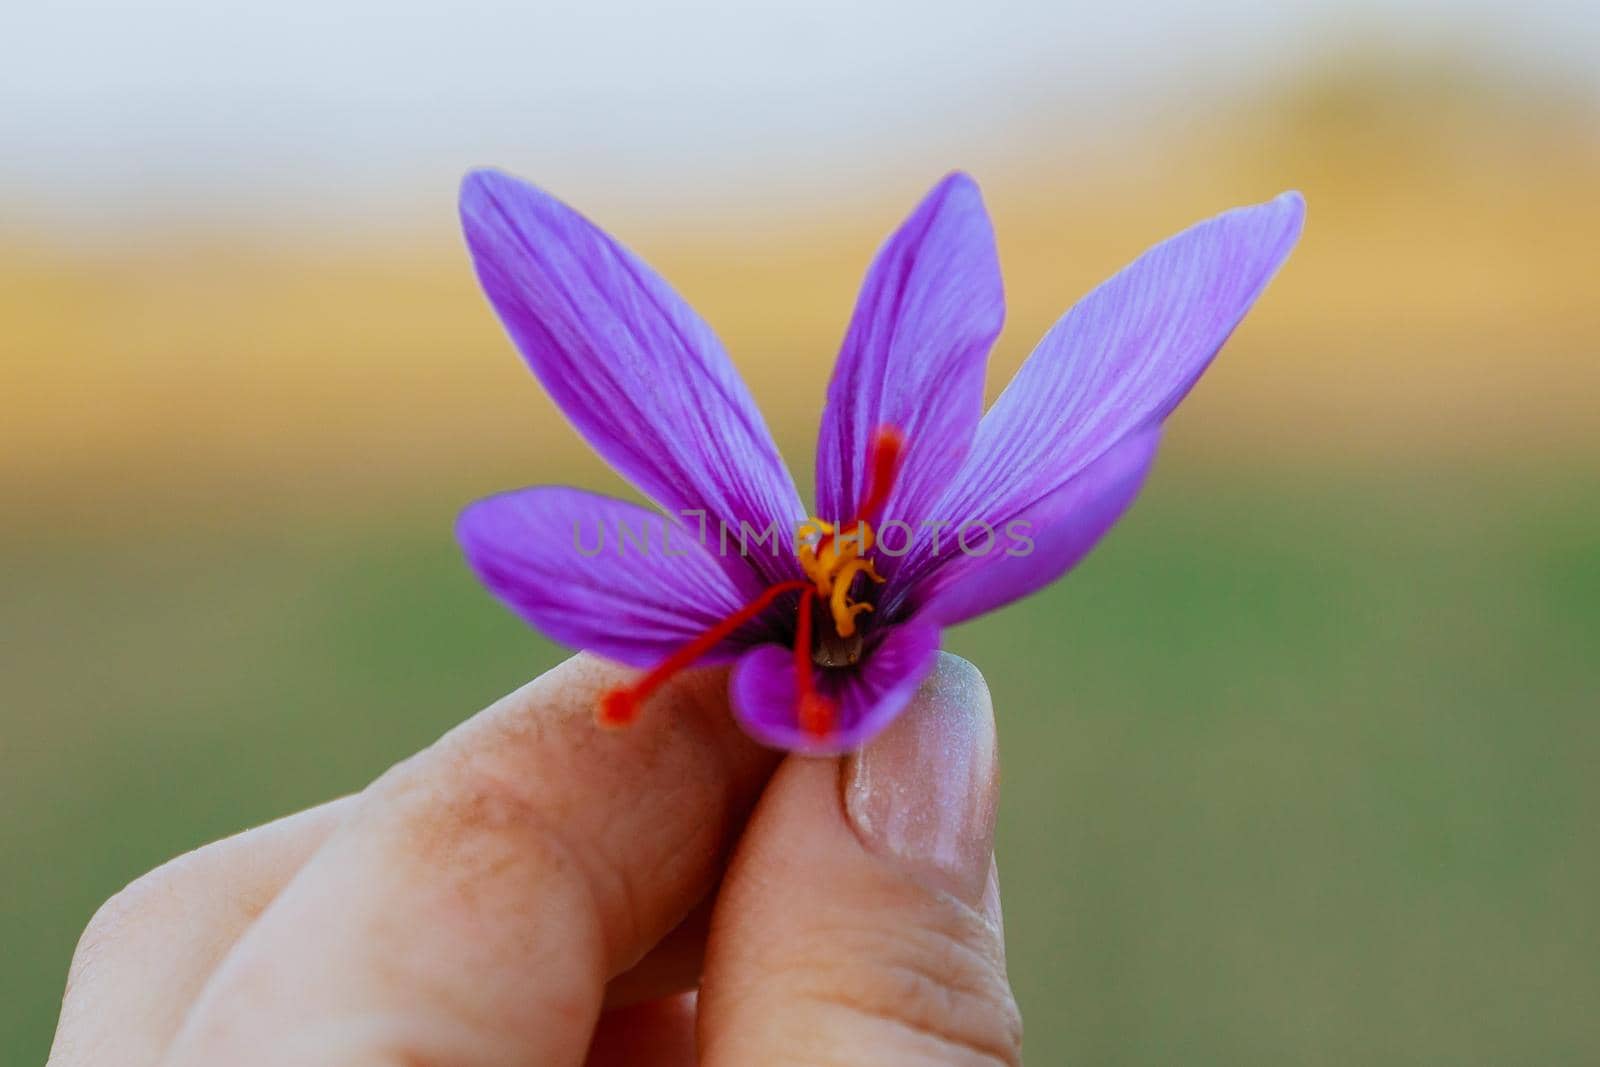 Worker hold hand gathering saffron flowers during harvesting season